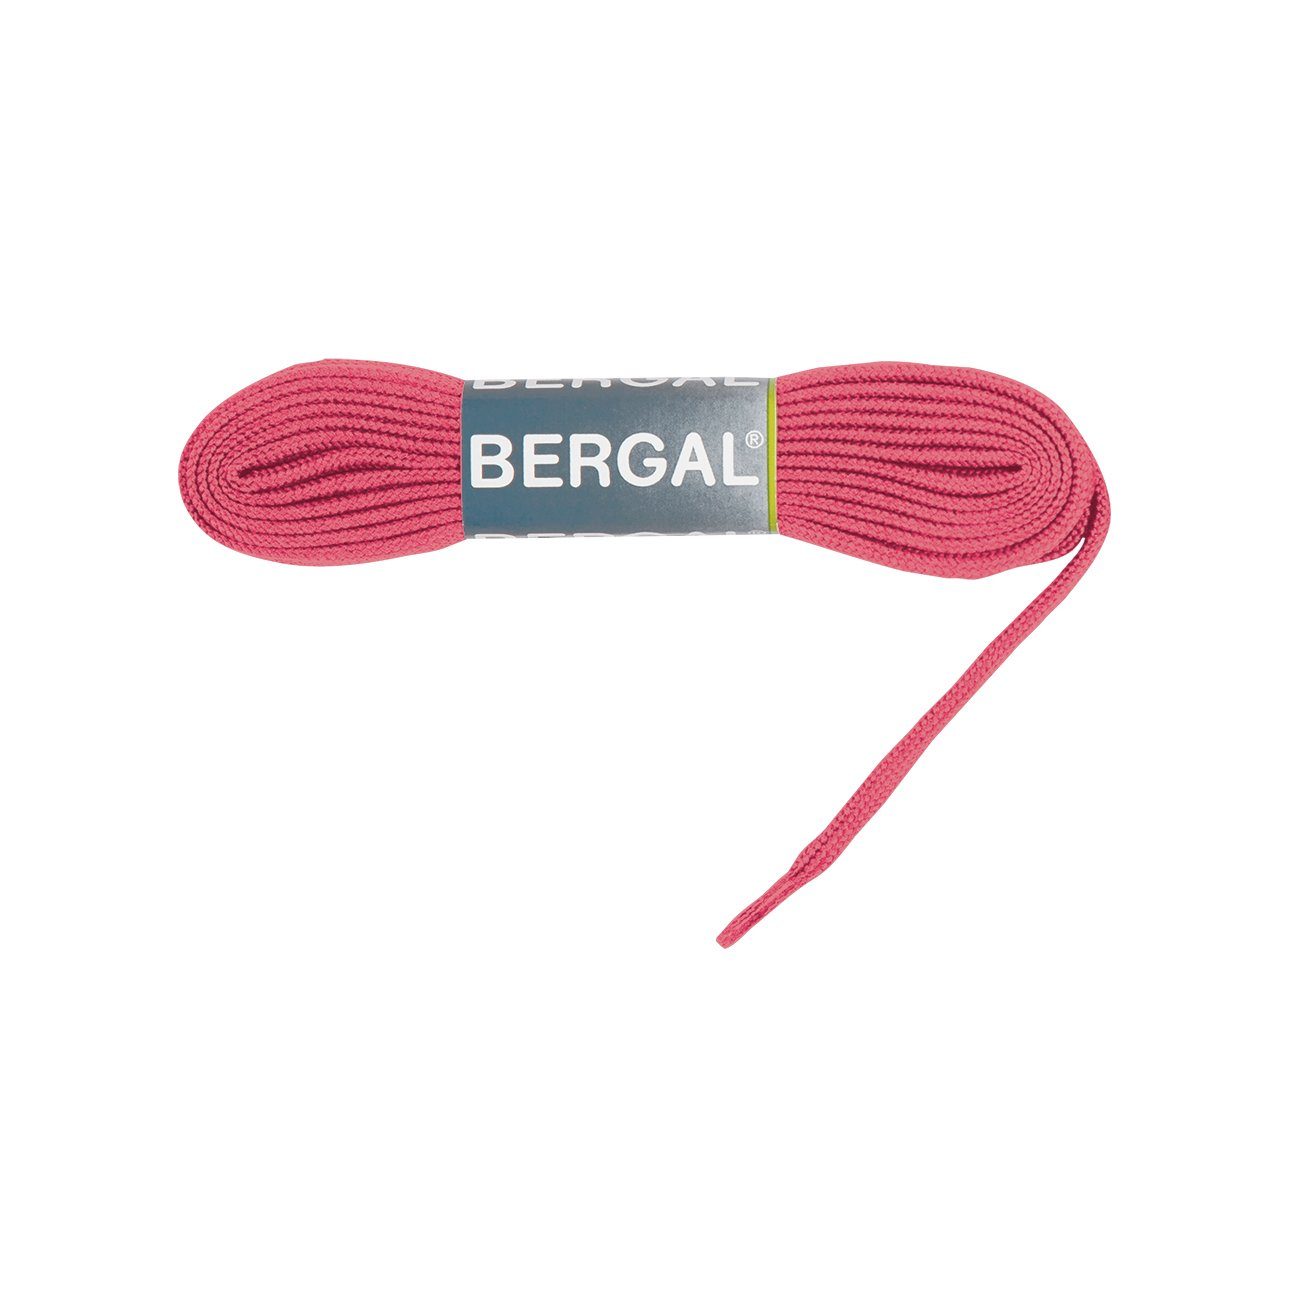 Bergal Schnürsenkel Sneaker Laces - Flach - 10 mm Breit Neonpink